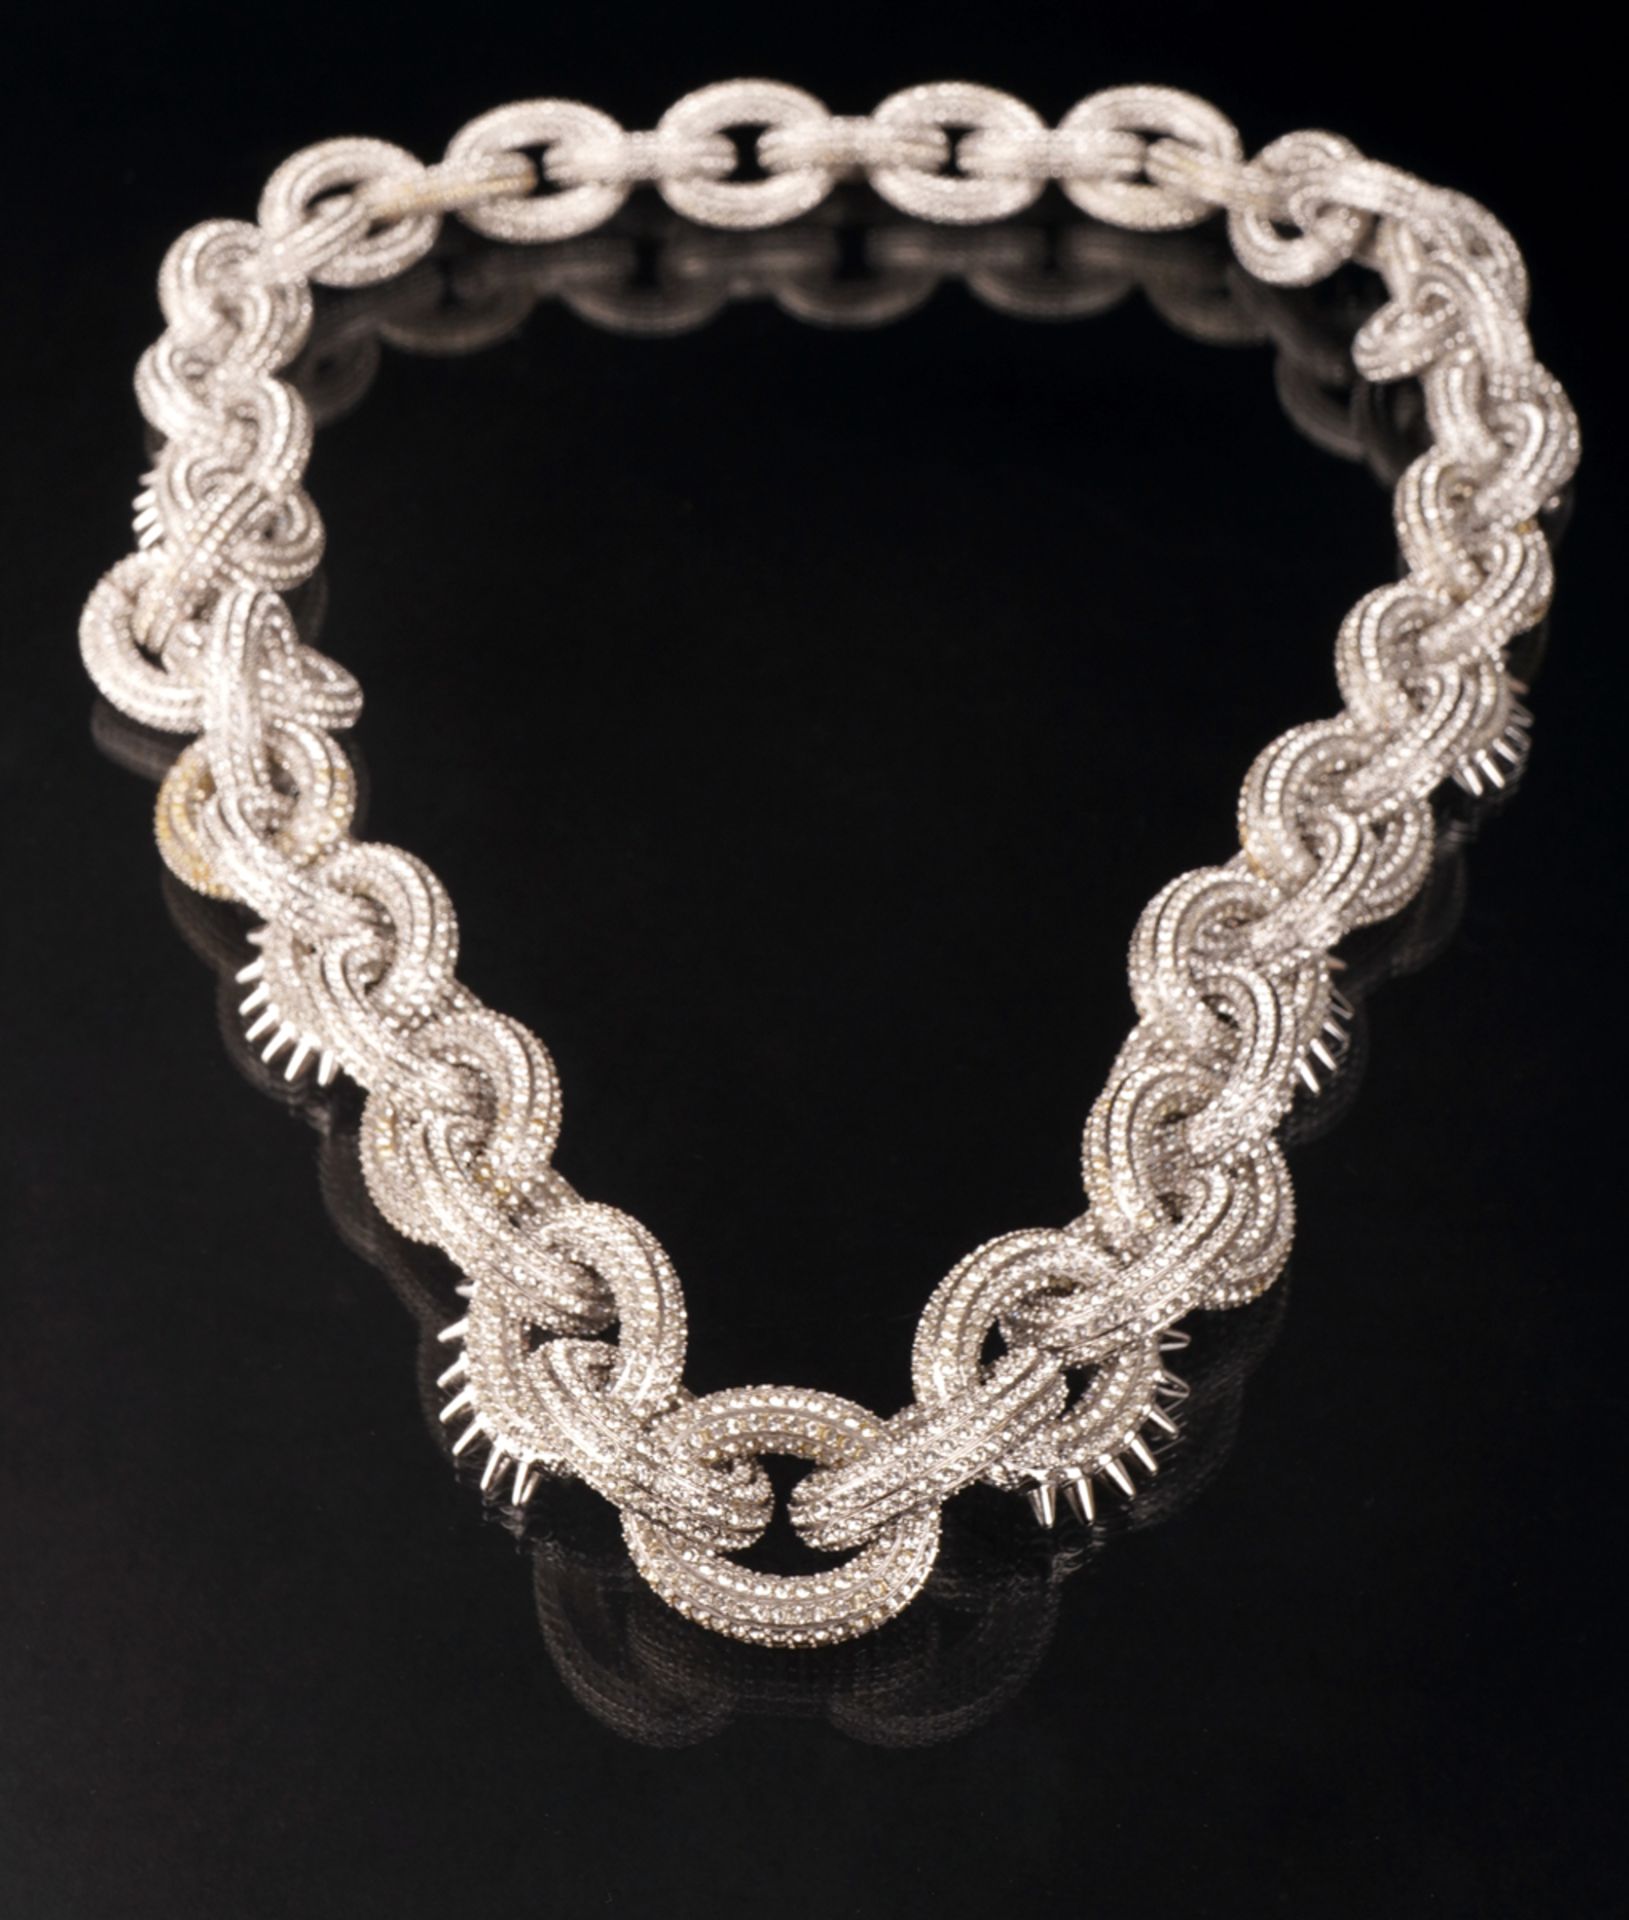 Große Halskette im Stile Swarovkis, Edelstahl - Image 6 of 8